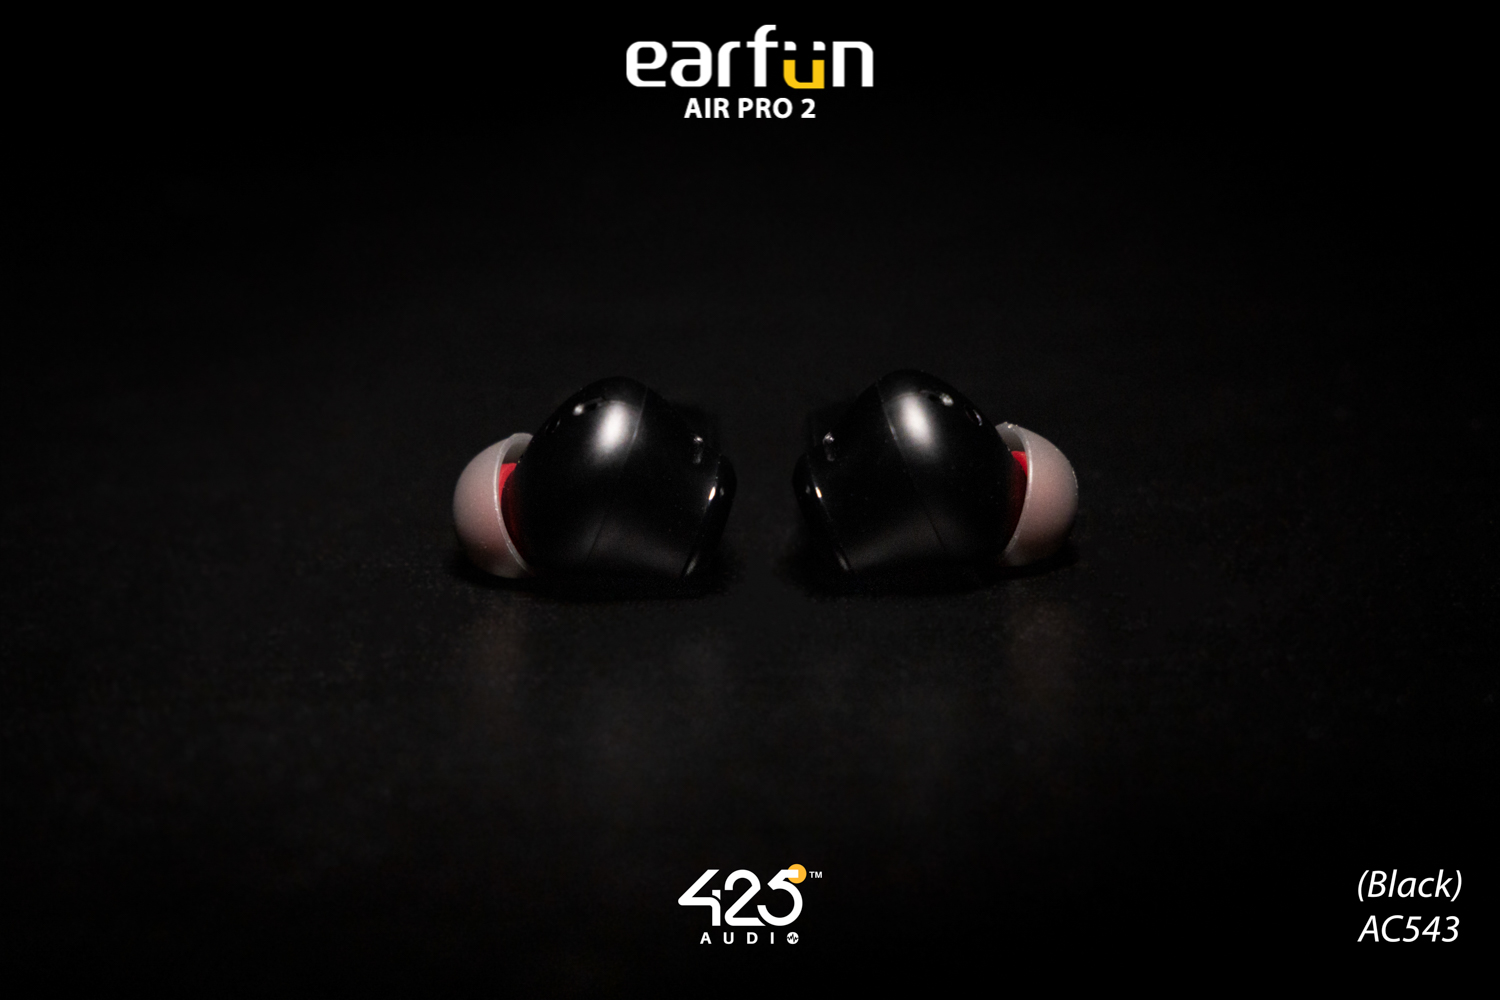 earfun air pro 2,earfun,black,bluetooth,5.2,active noise cancelling,หูฟัง,หูฟังไร้สาย,ipx5,คุยชัด,เบสหนัก